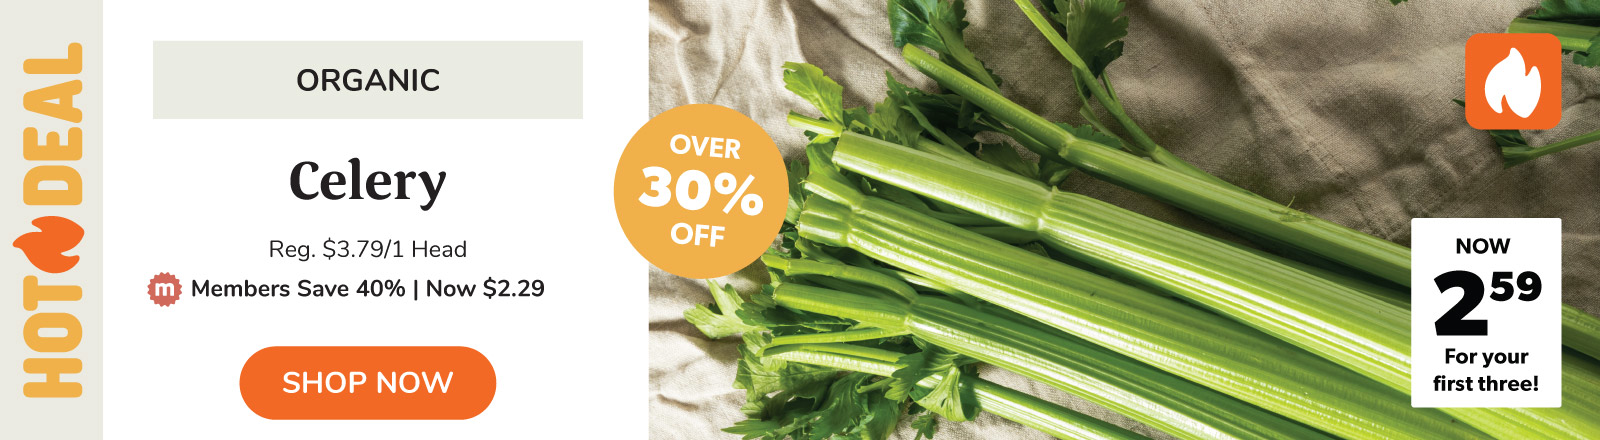 Save on organic celery this week